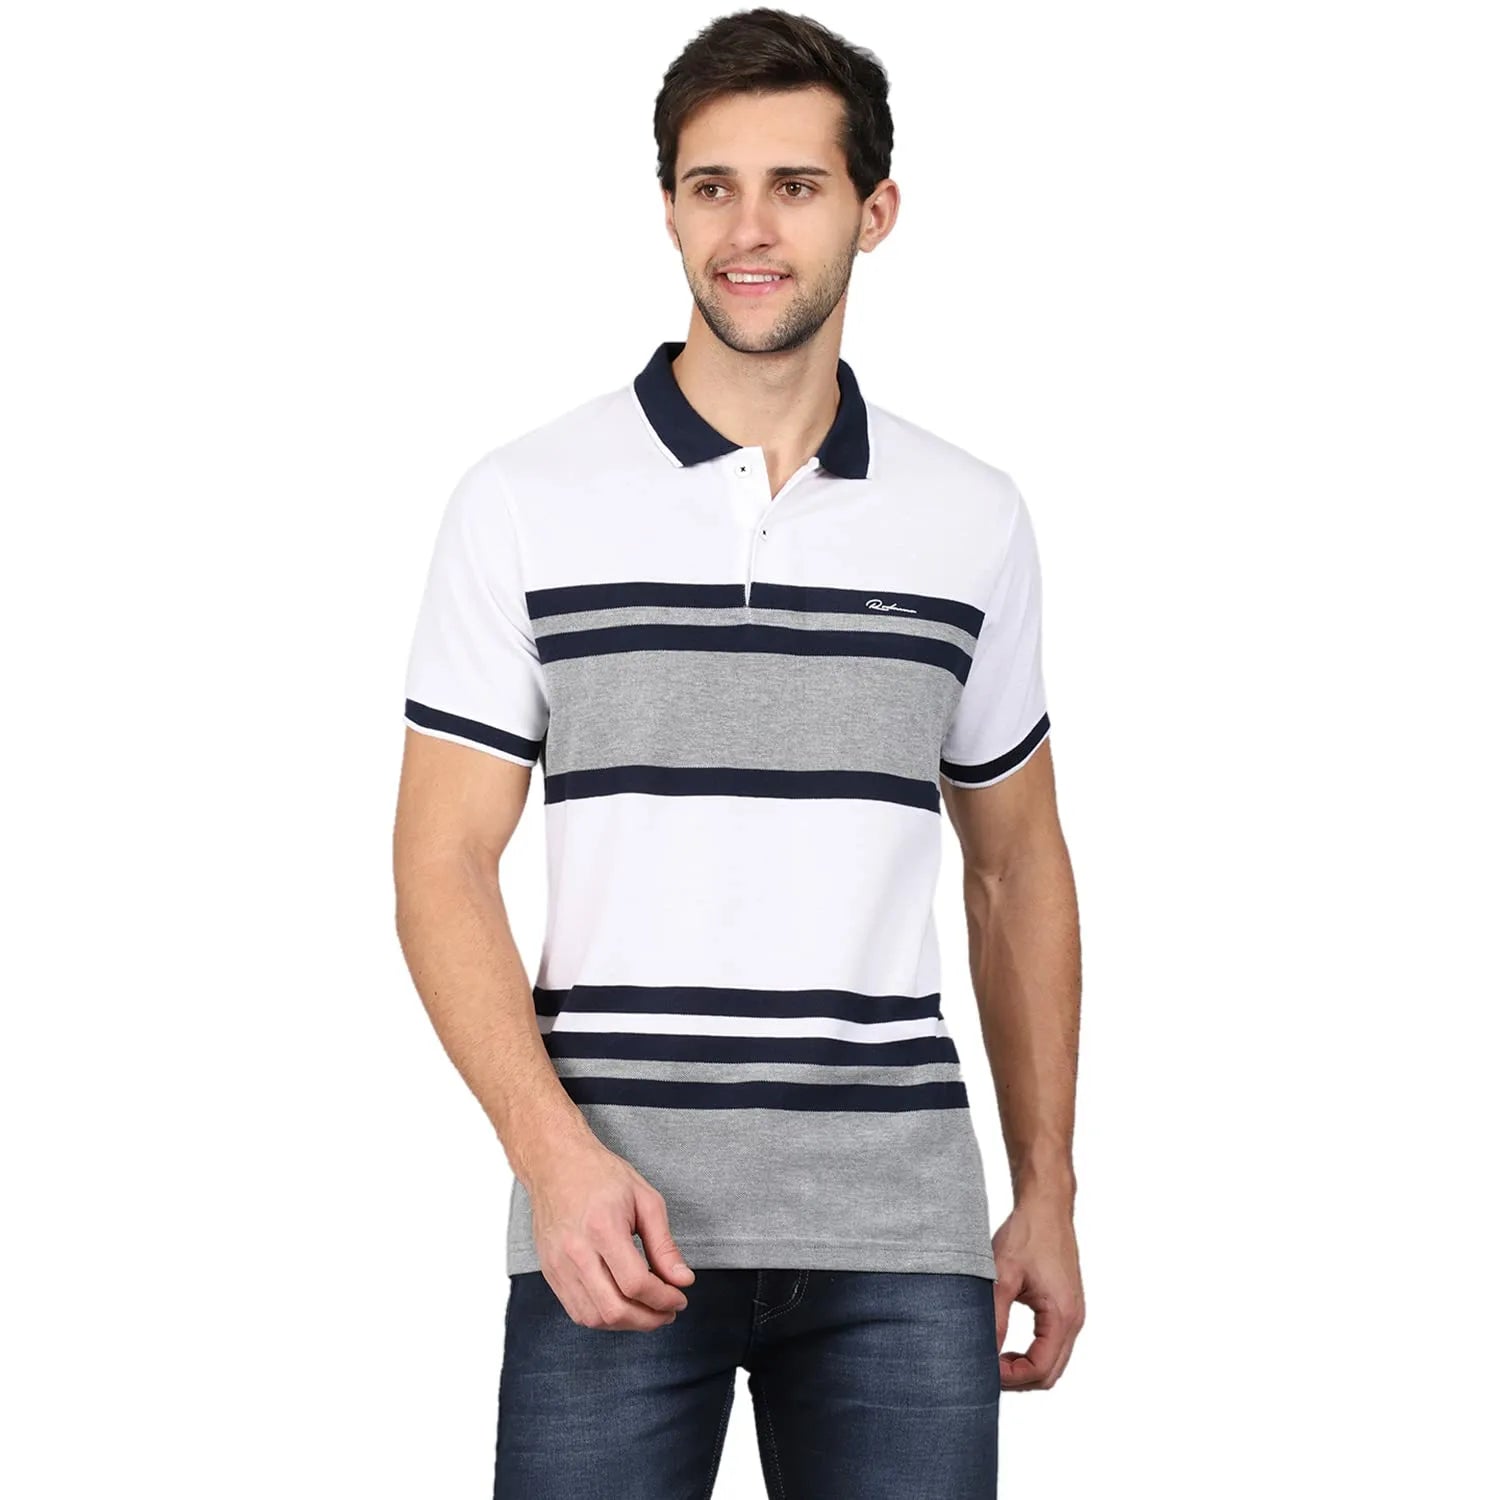 Rodamo Round Neck Half Sleeve Printed Tshirt for Men Fashion - ShopIMO